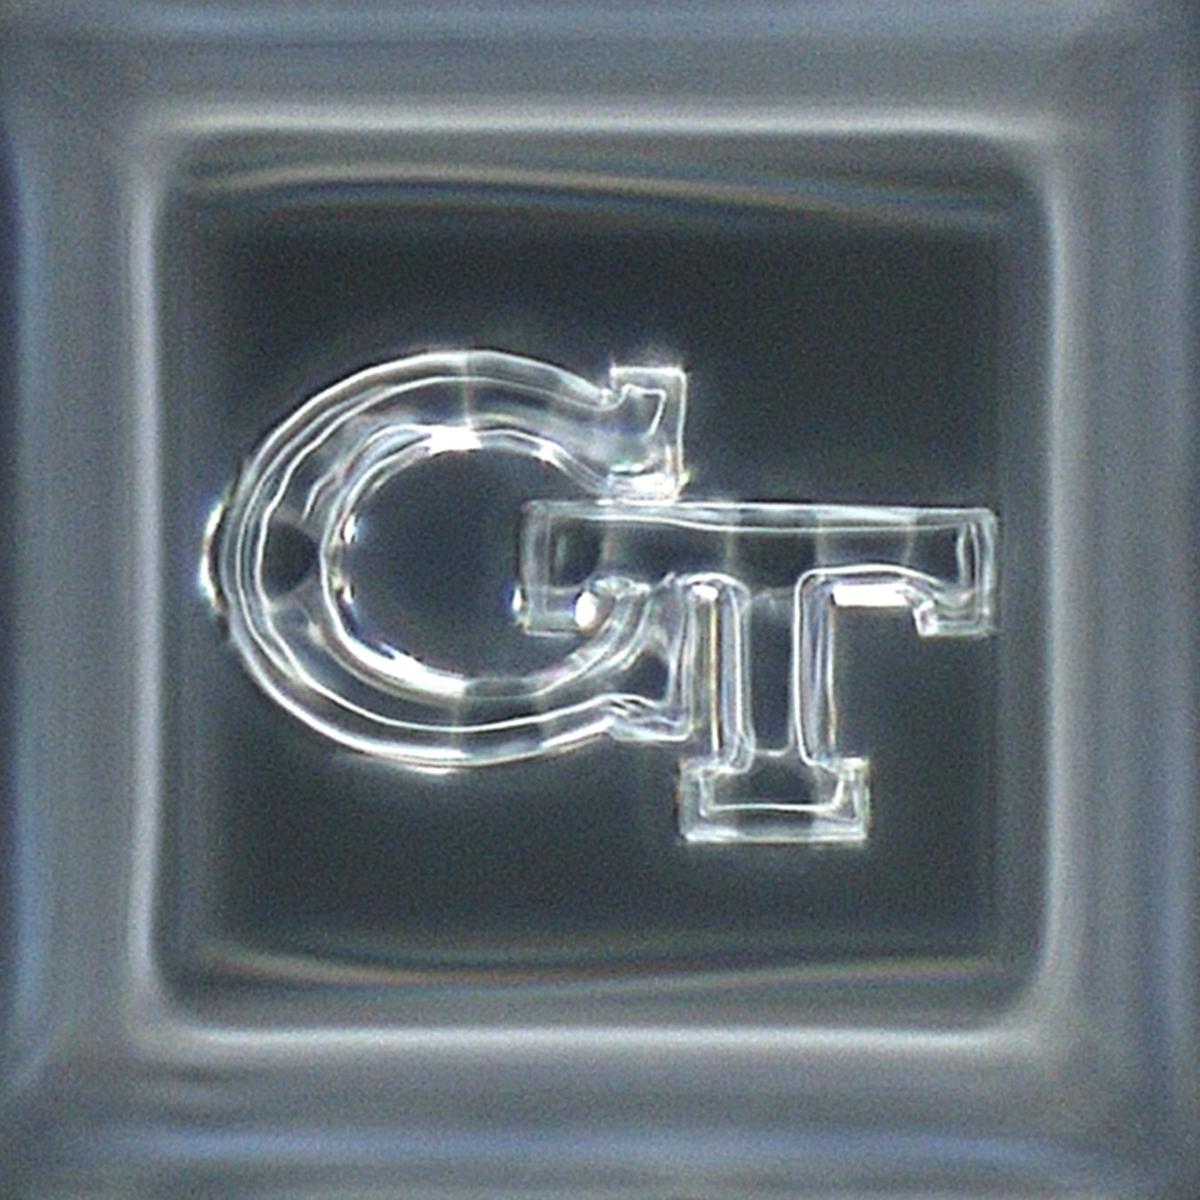 a 3D printed silica glass interlocking GT logo